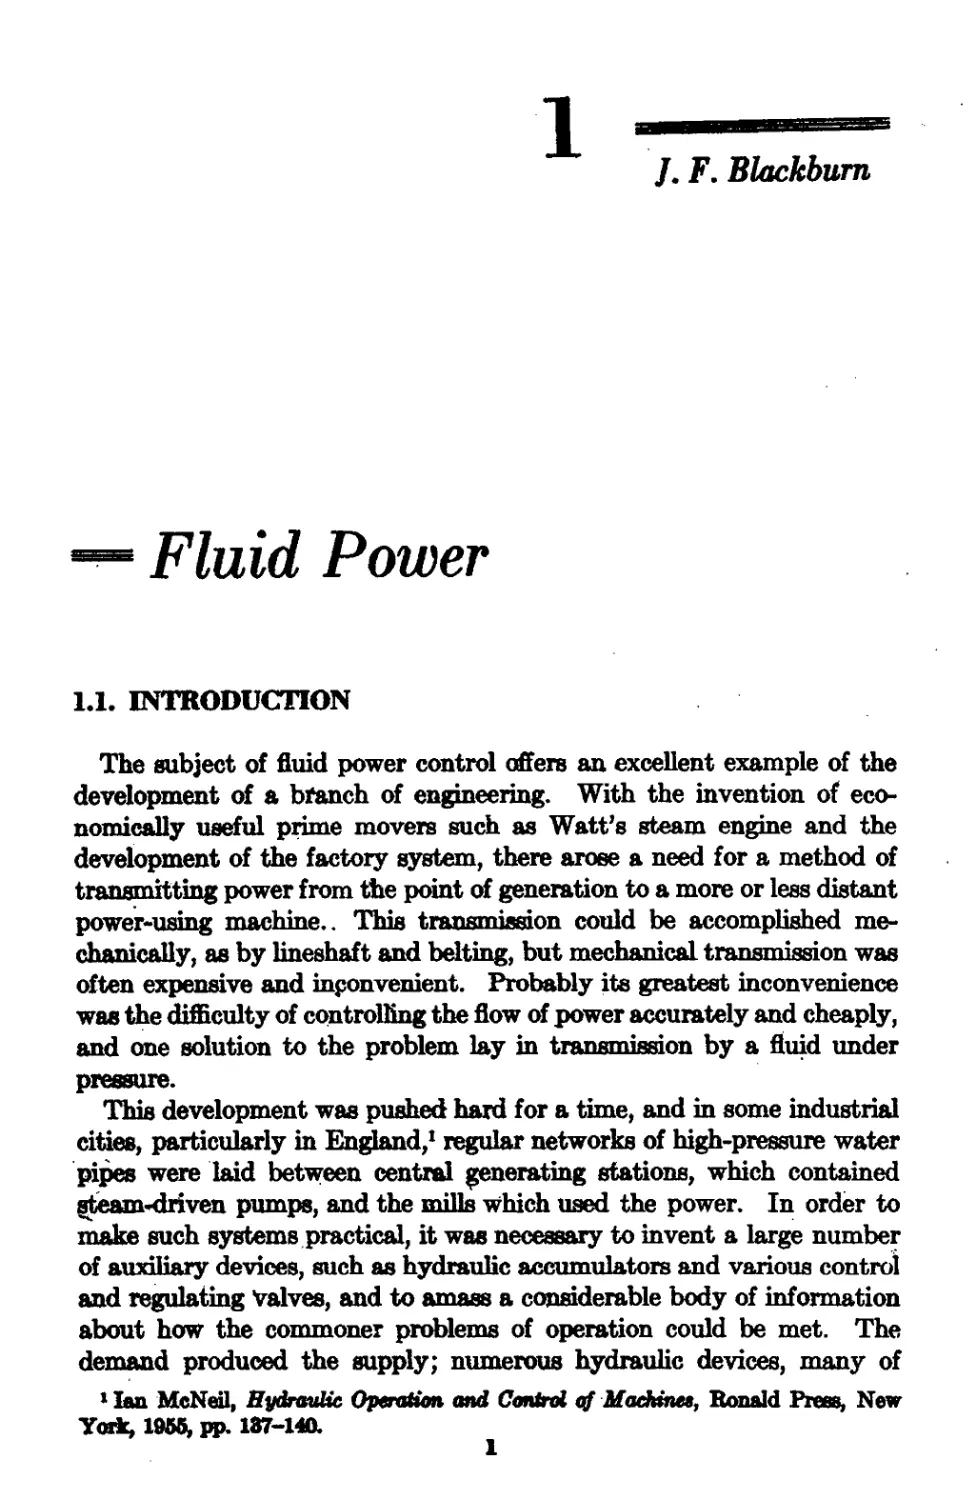 Chapter 1 Fluid Power: J. F. Blackburn